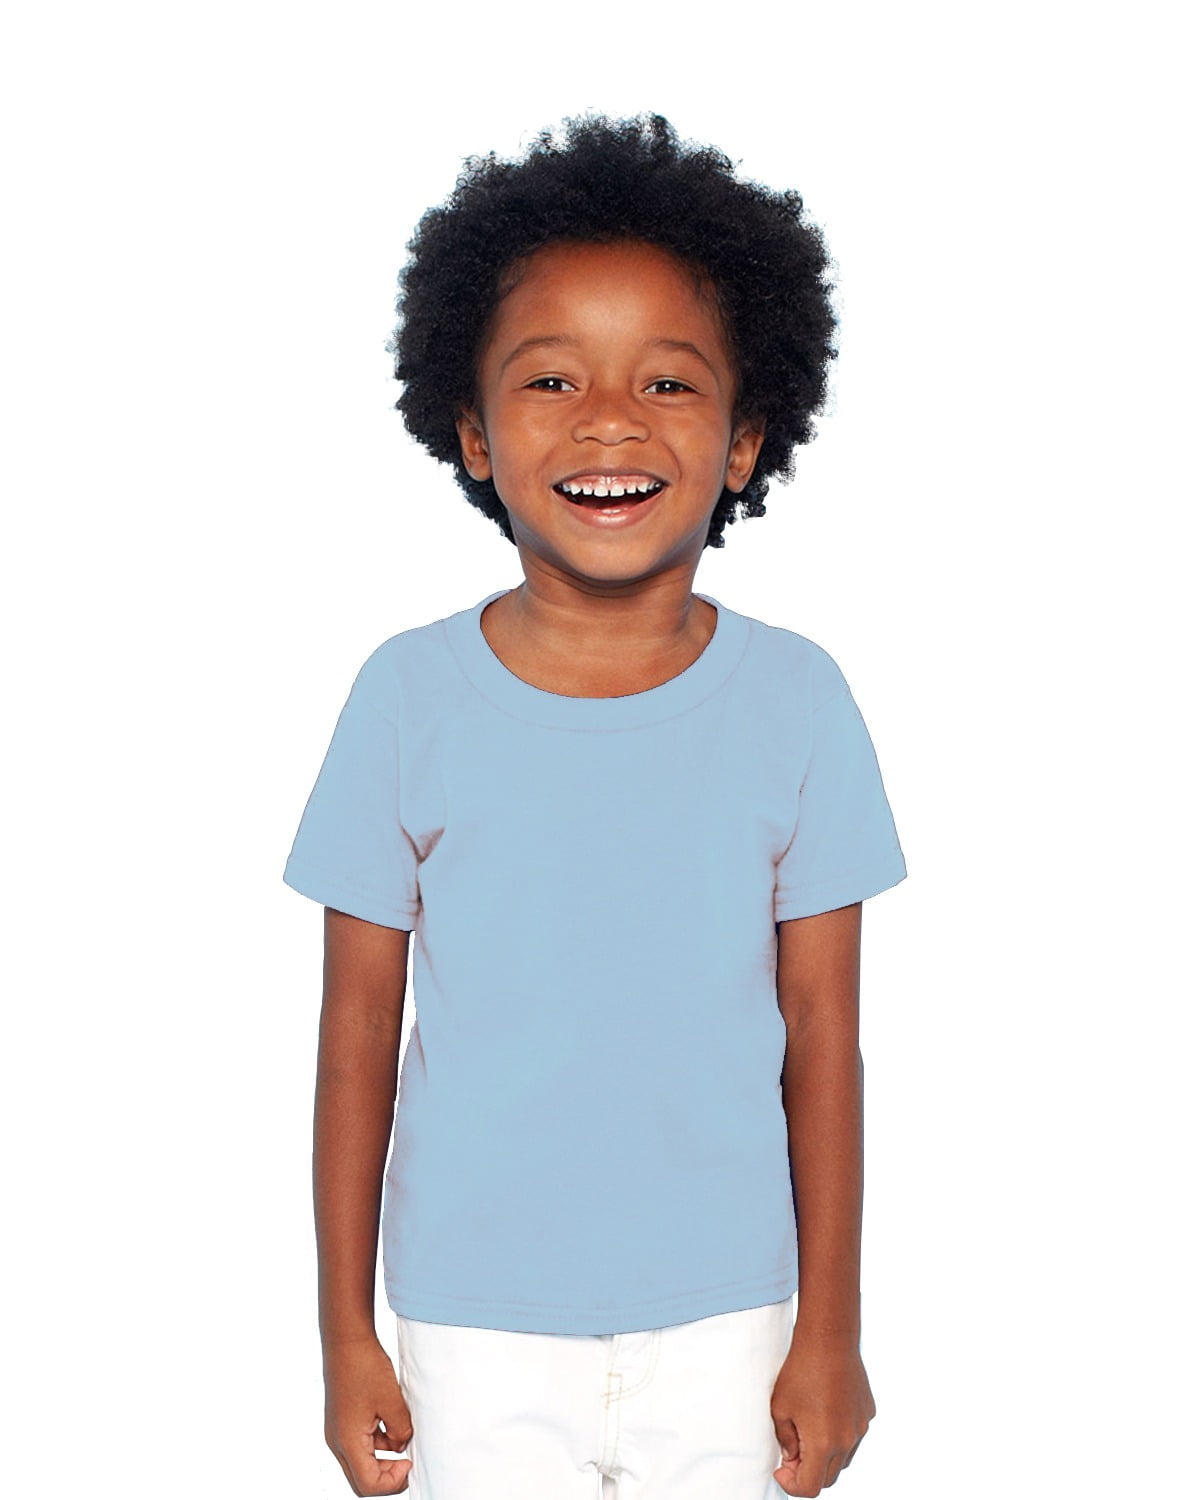 New Genuine Size 7/8 Bluey LongSleeve T-shirt Top Kids 